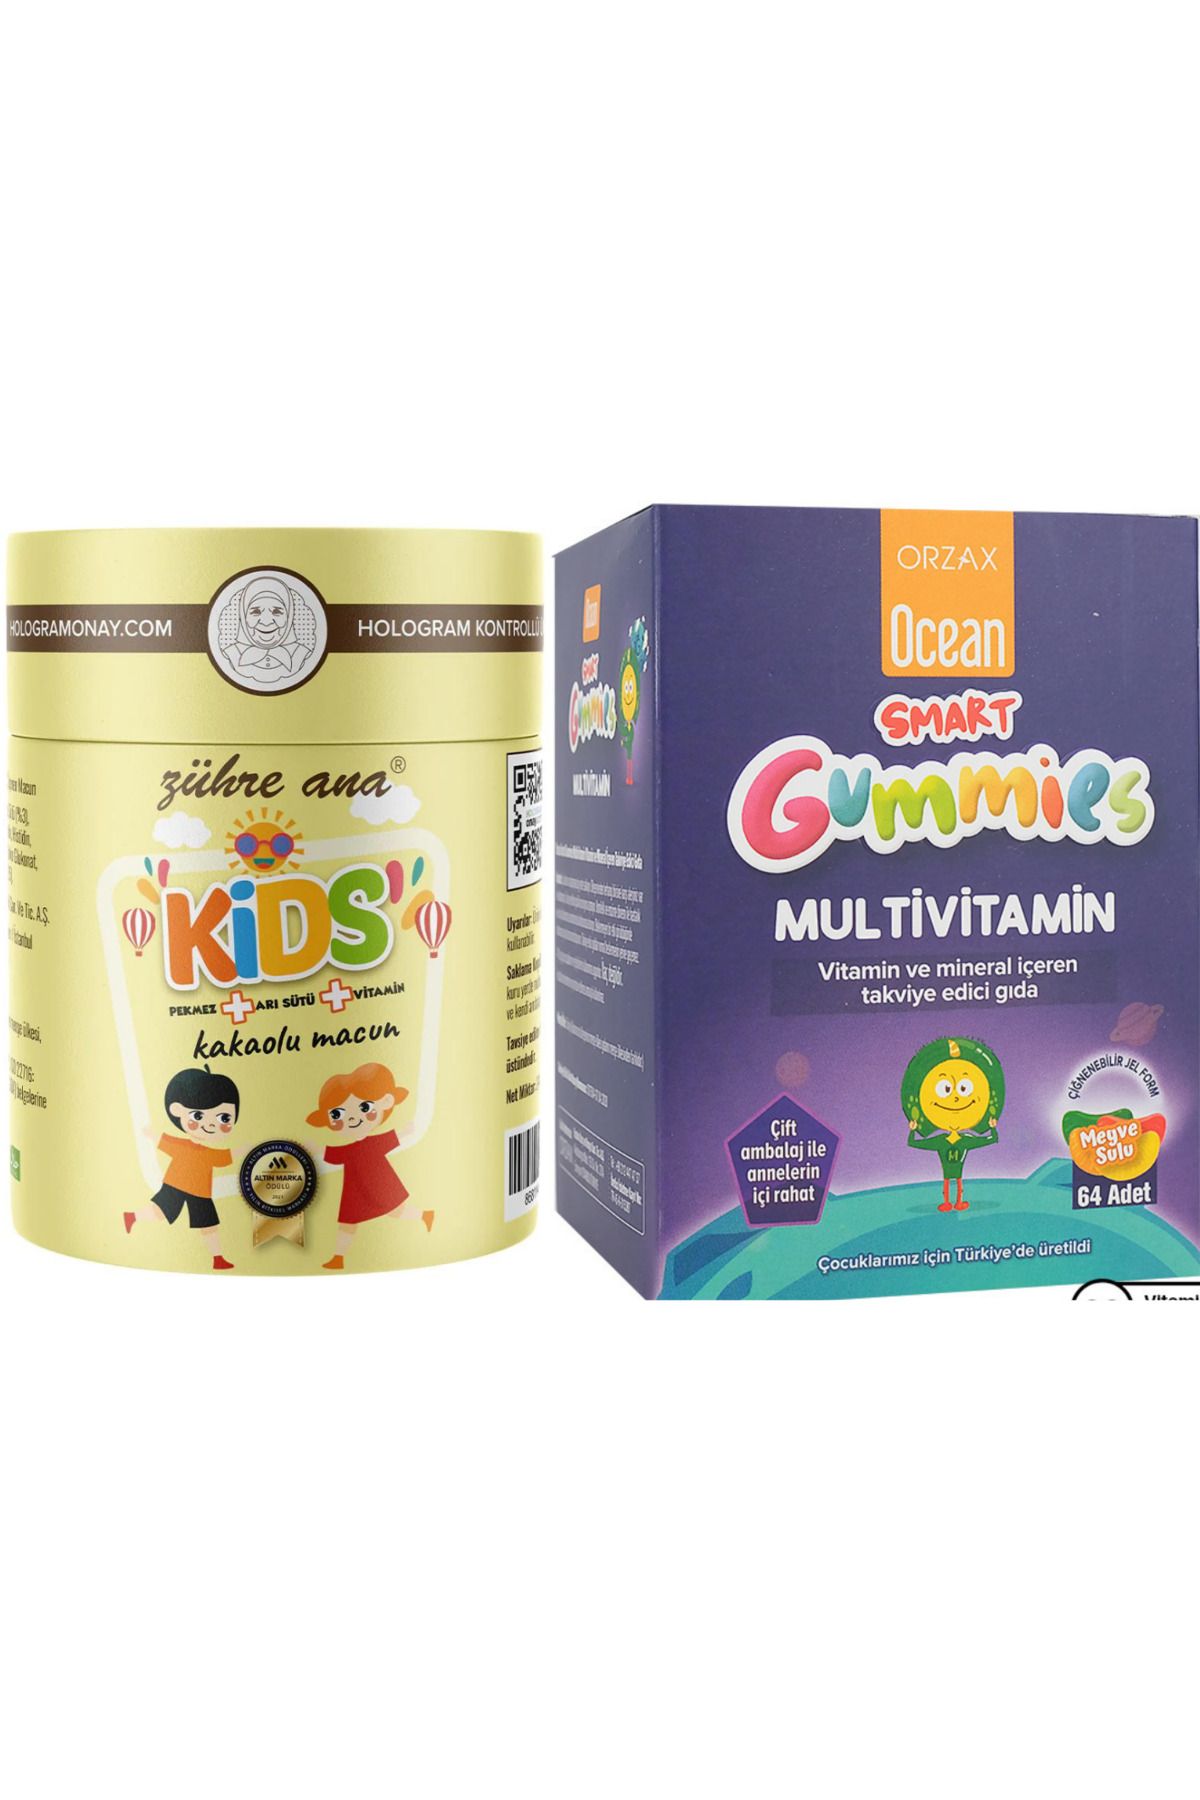 Zühre Ana Kids Macunu 240ml + Ocean Smart Gummies Multivitamin 64'lü